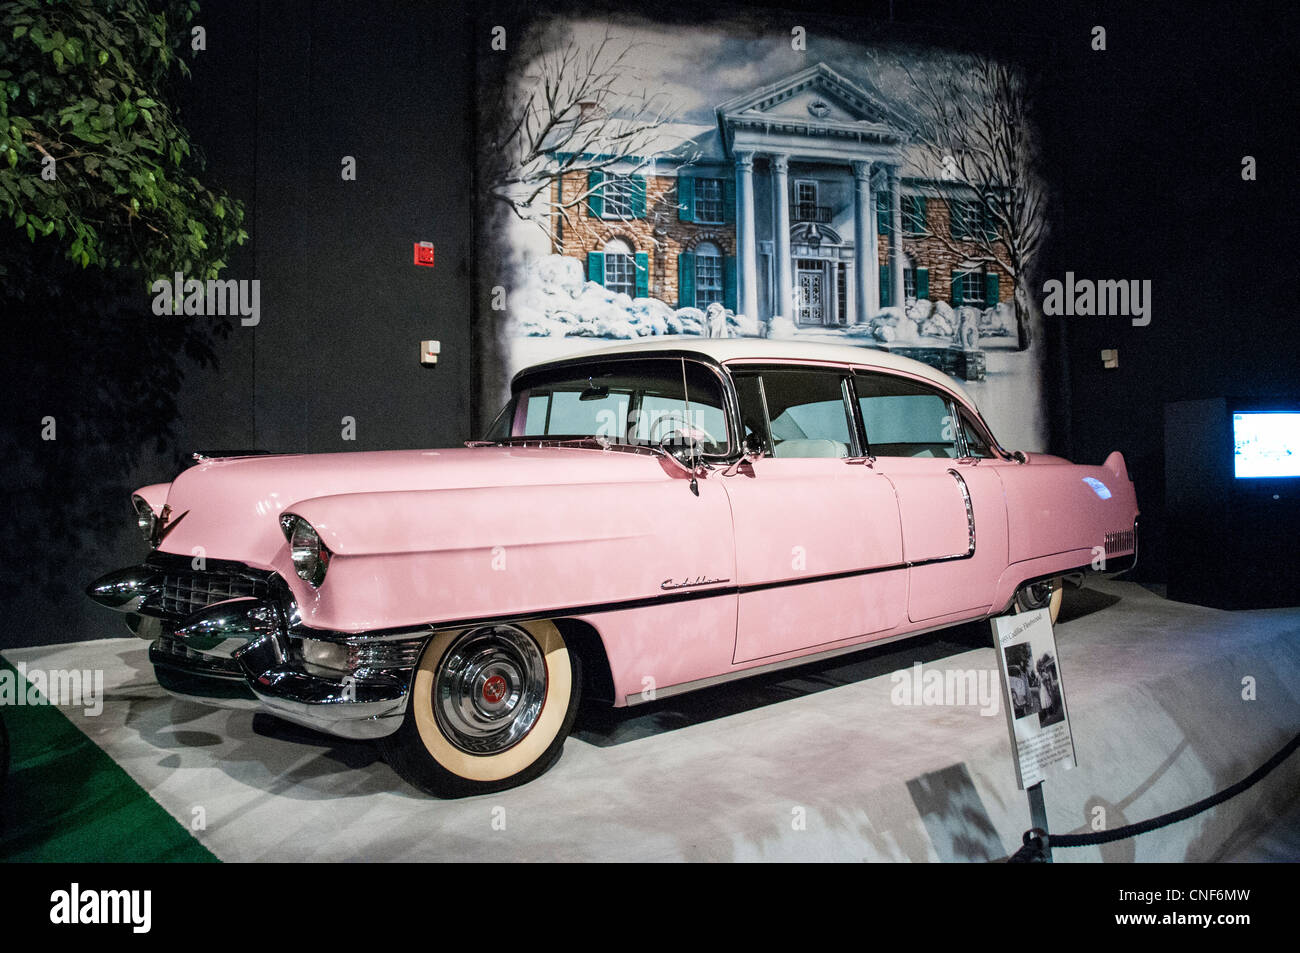 Elvis Presley's home and museum Graceland, car museum with Elvis 1956 Cadillac Eldorado Stock Photo